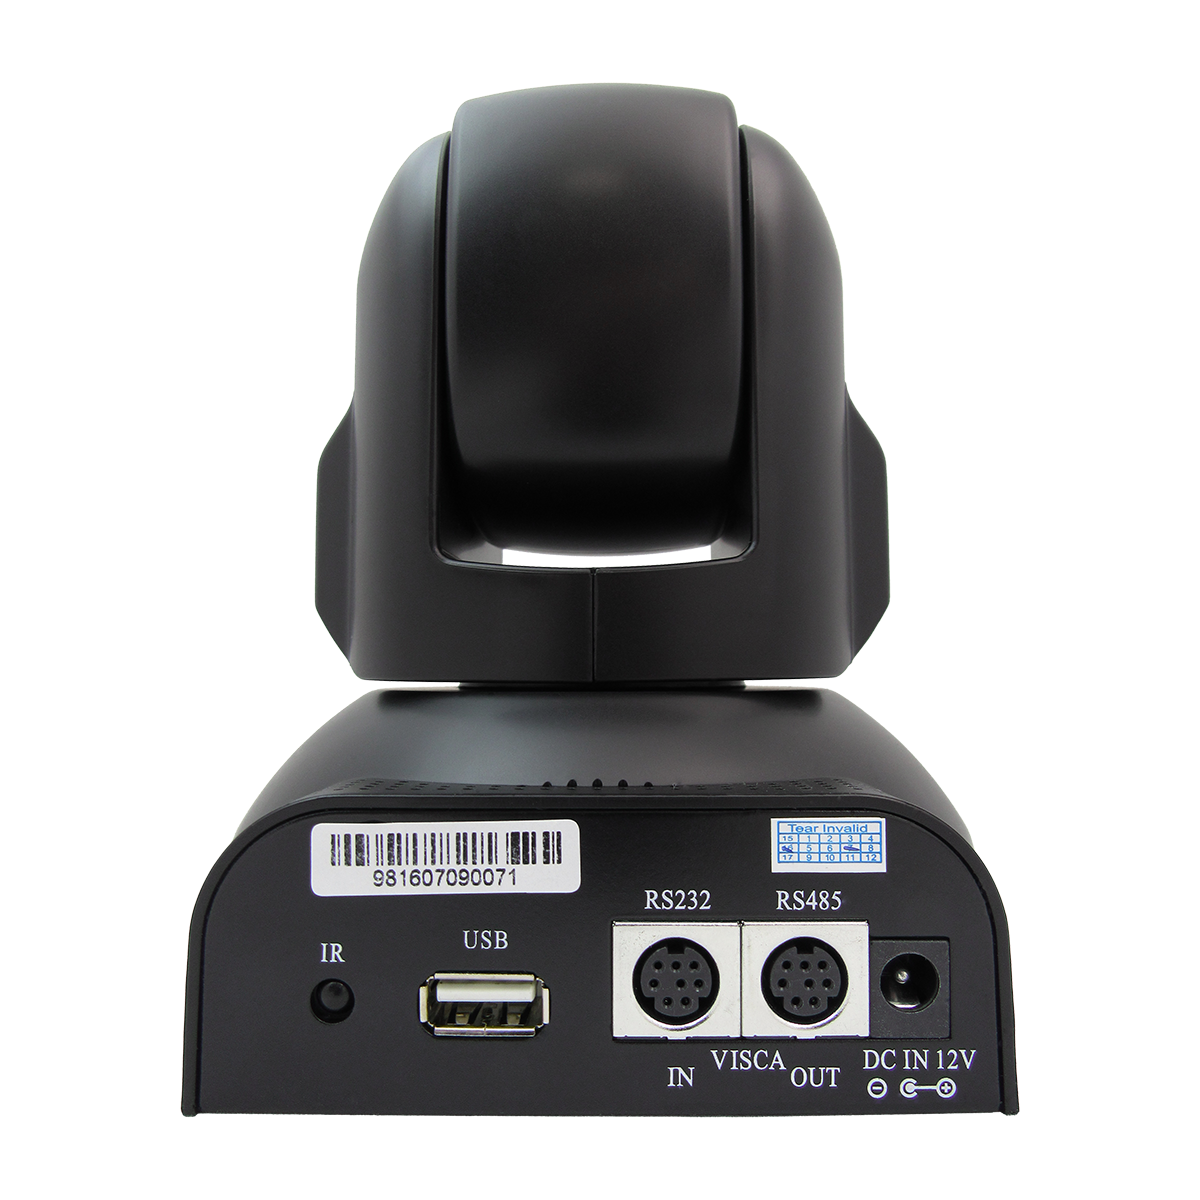 HuddleCamHD 10X Optical Zoom USB 2.0 Camera (Black)